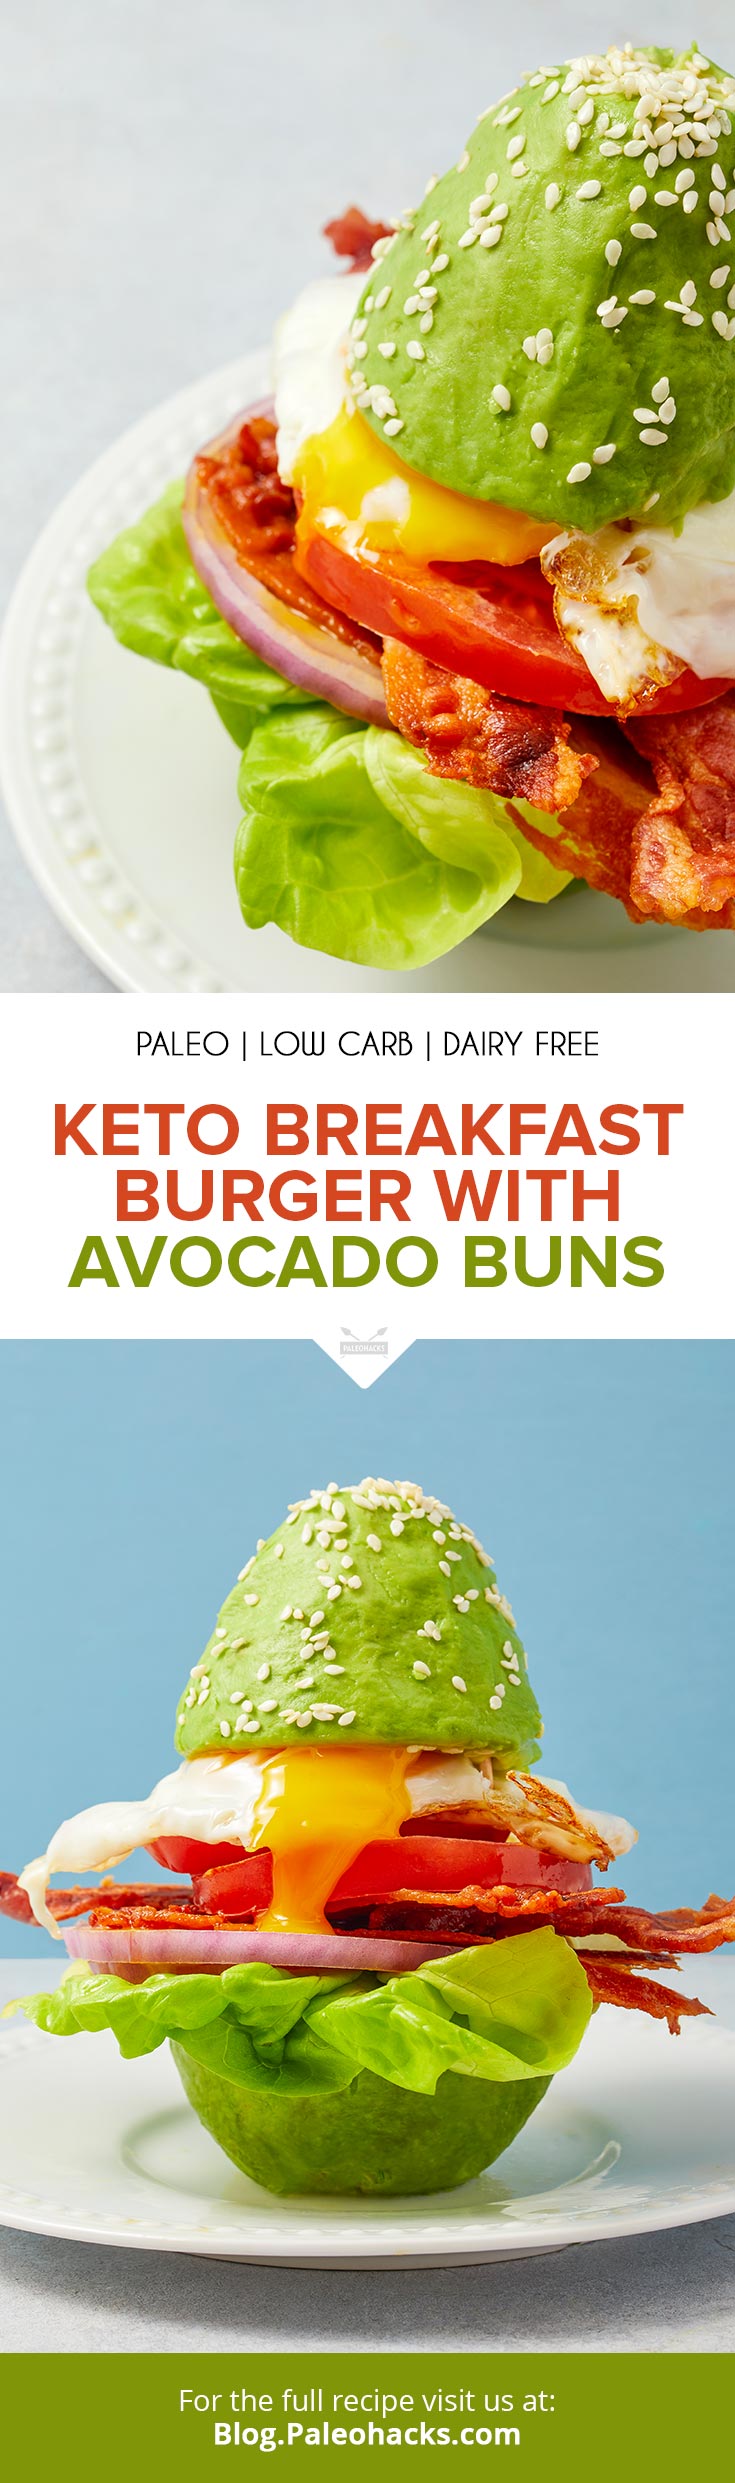 Keto Breakfast Burger with Avocado Buns 1